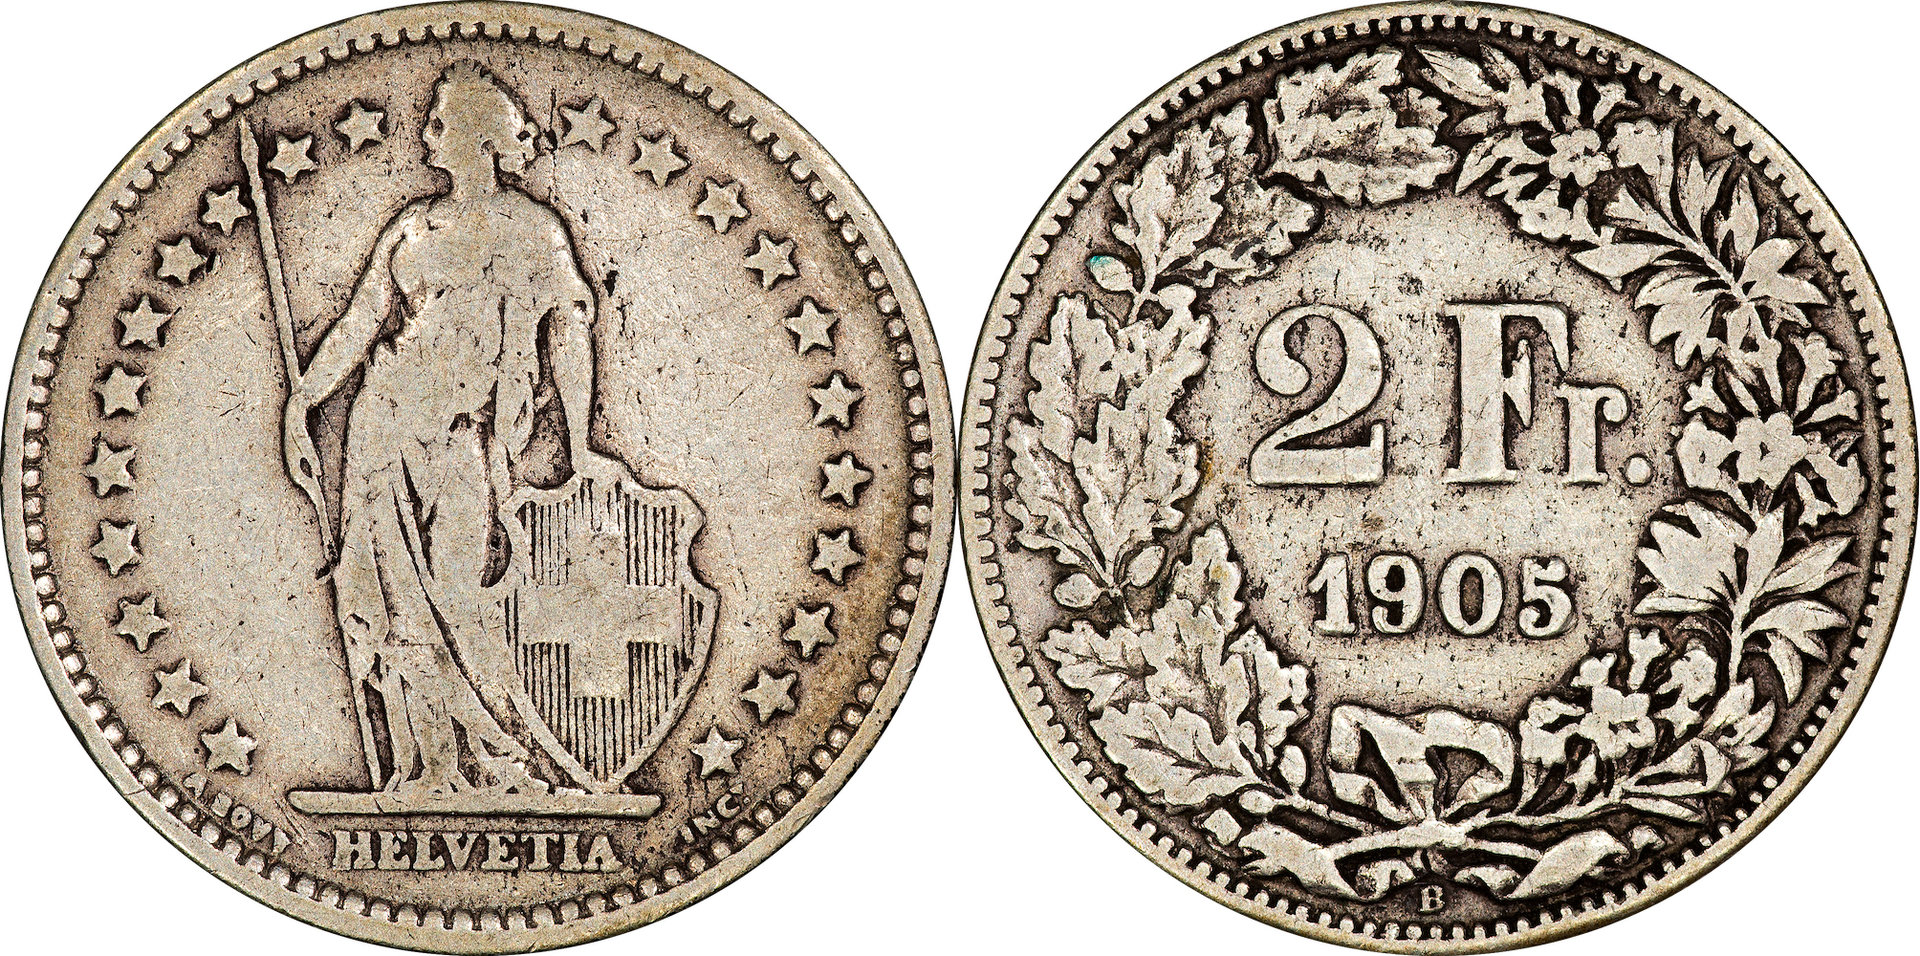 Switzerland - 1905 B 2 Francs.jpg